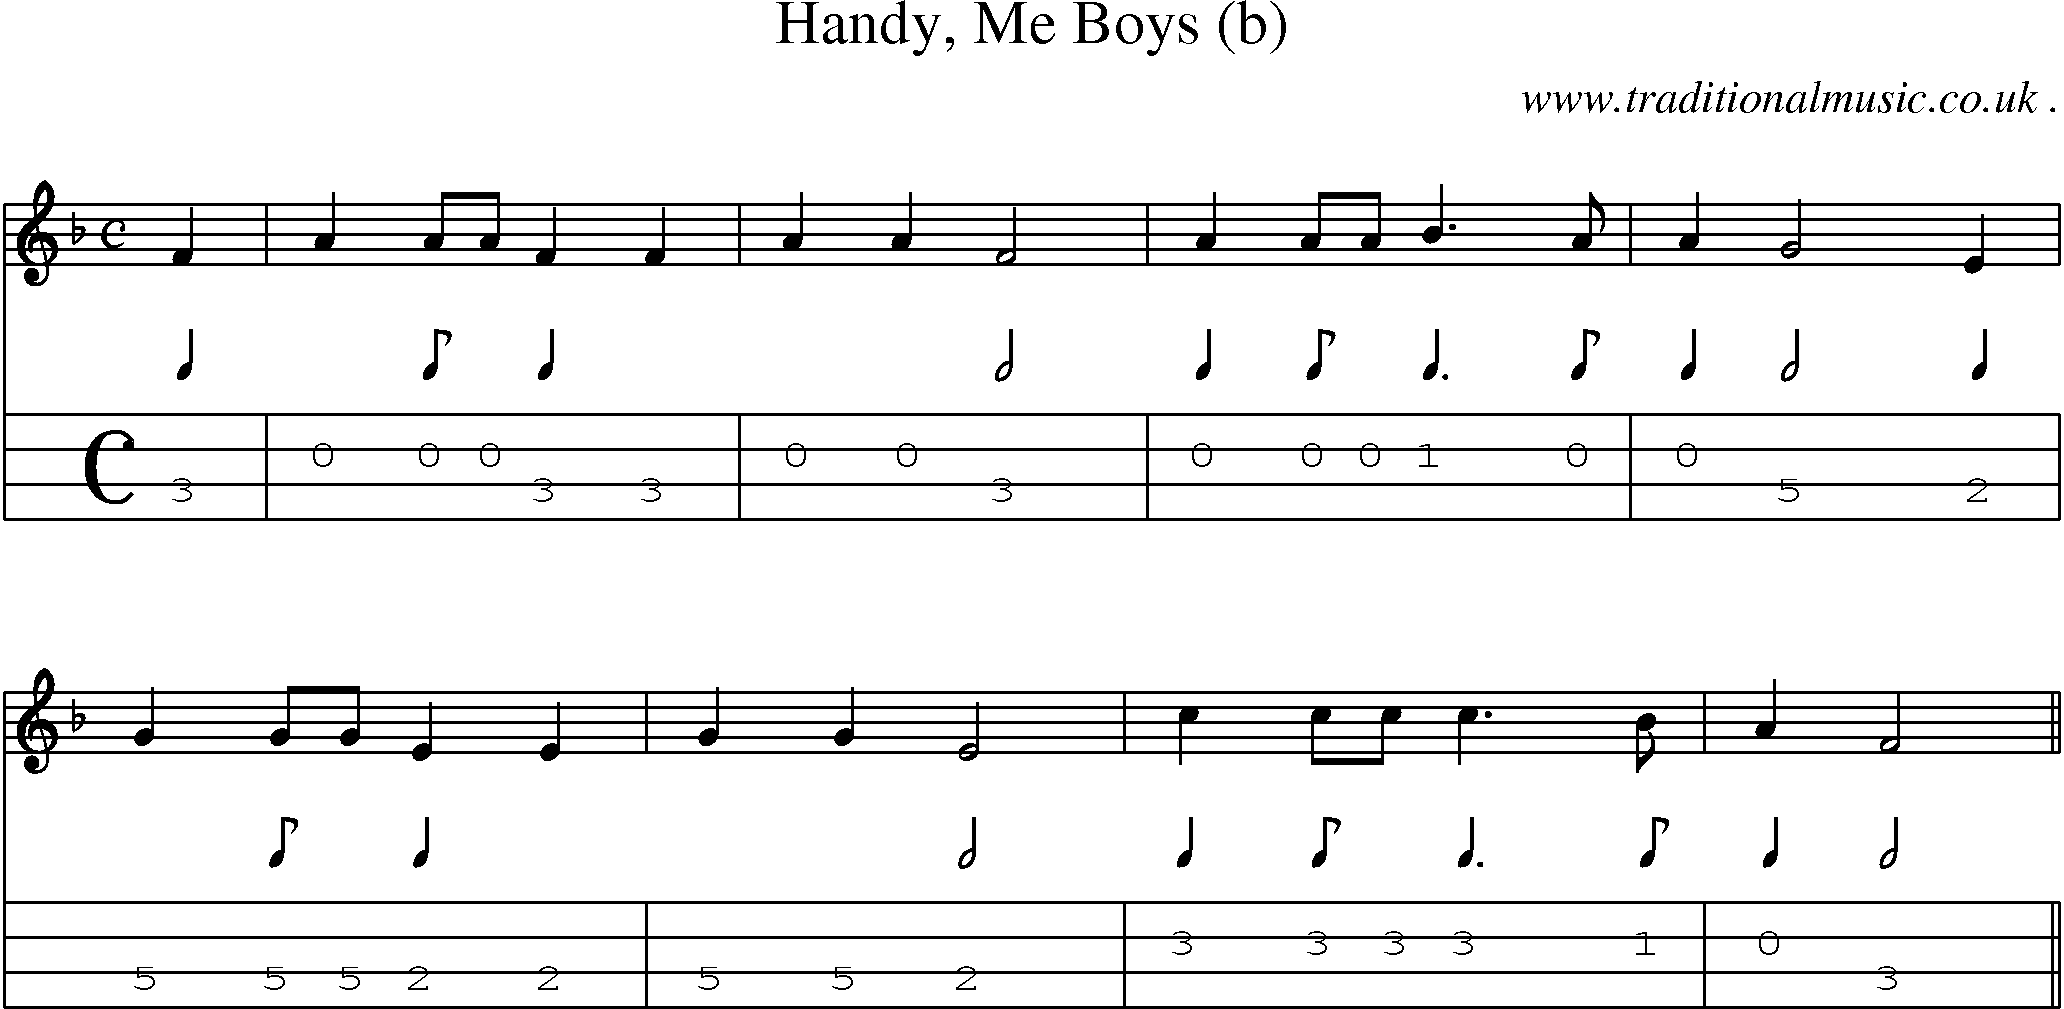 Sheet-Music and Mandolin Tabs for Handy Me Boys (b)